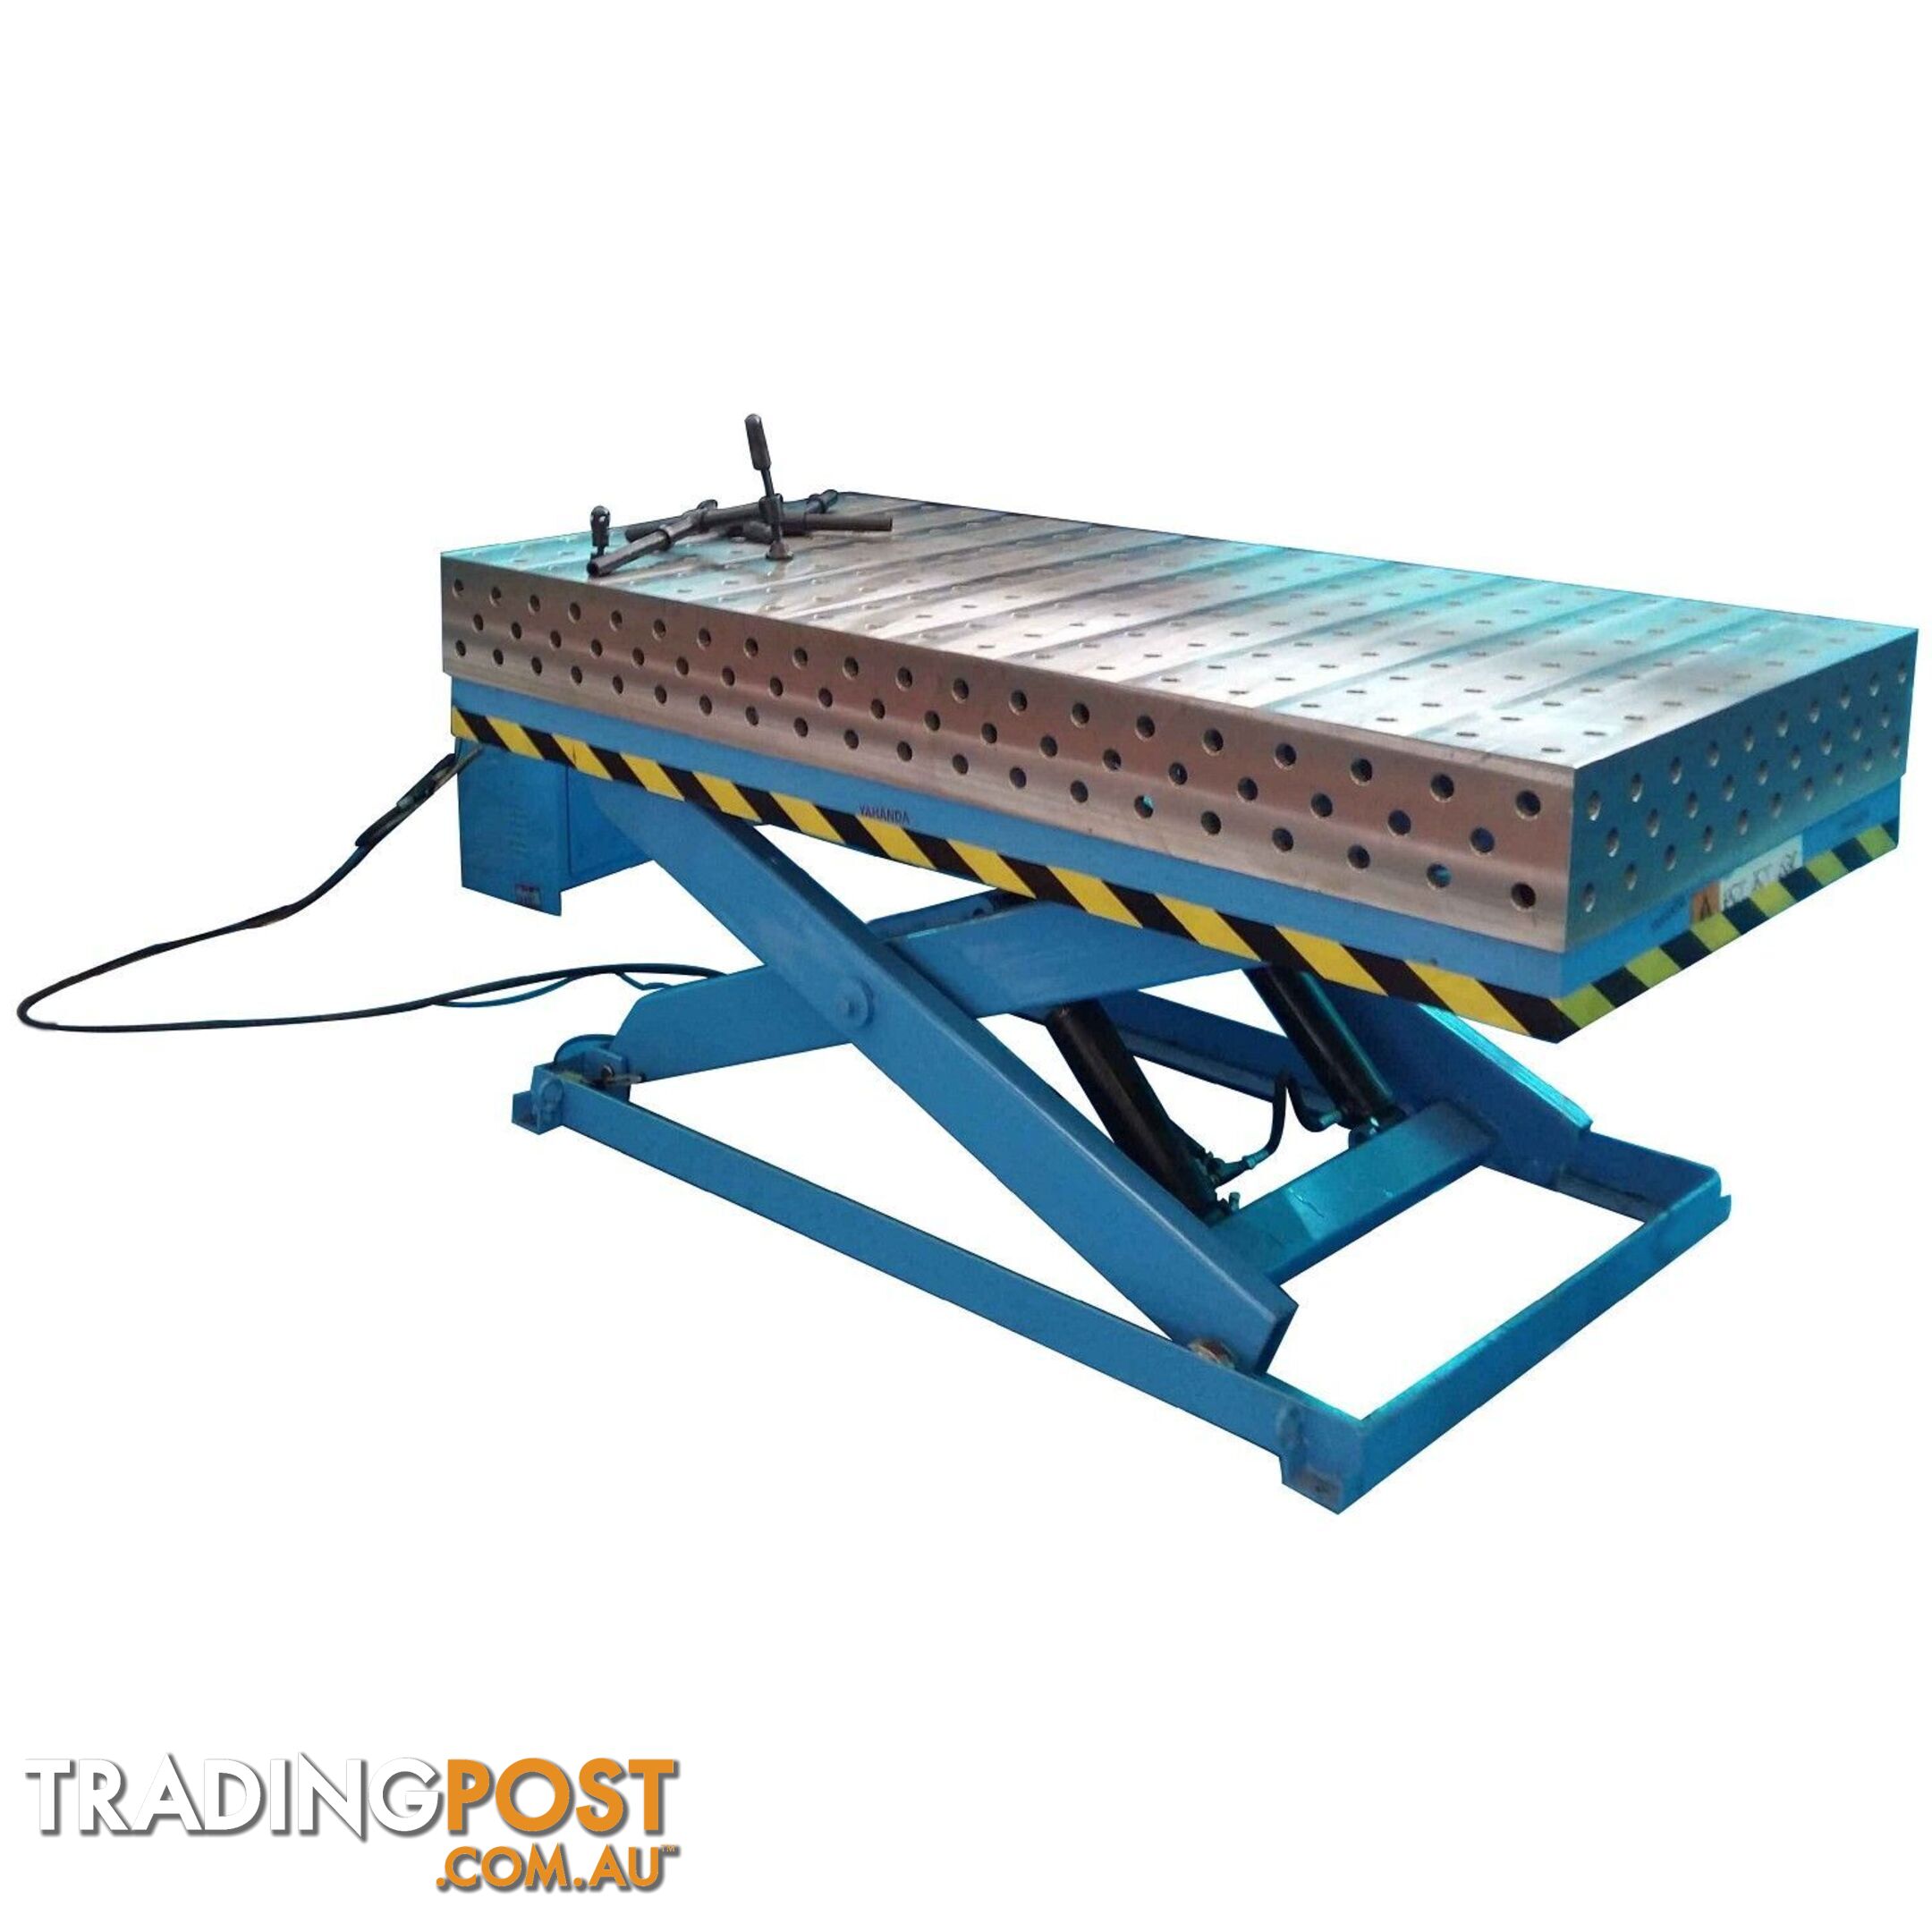 3D Welding Table With Hydraulic Scissor Lift 1500mm X 1500mm X 100mm 16YY1515